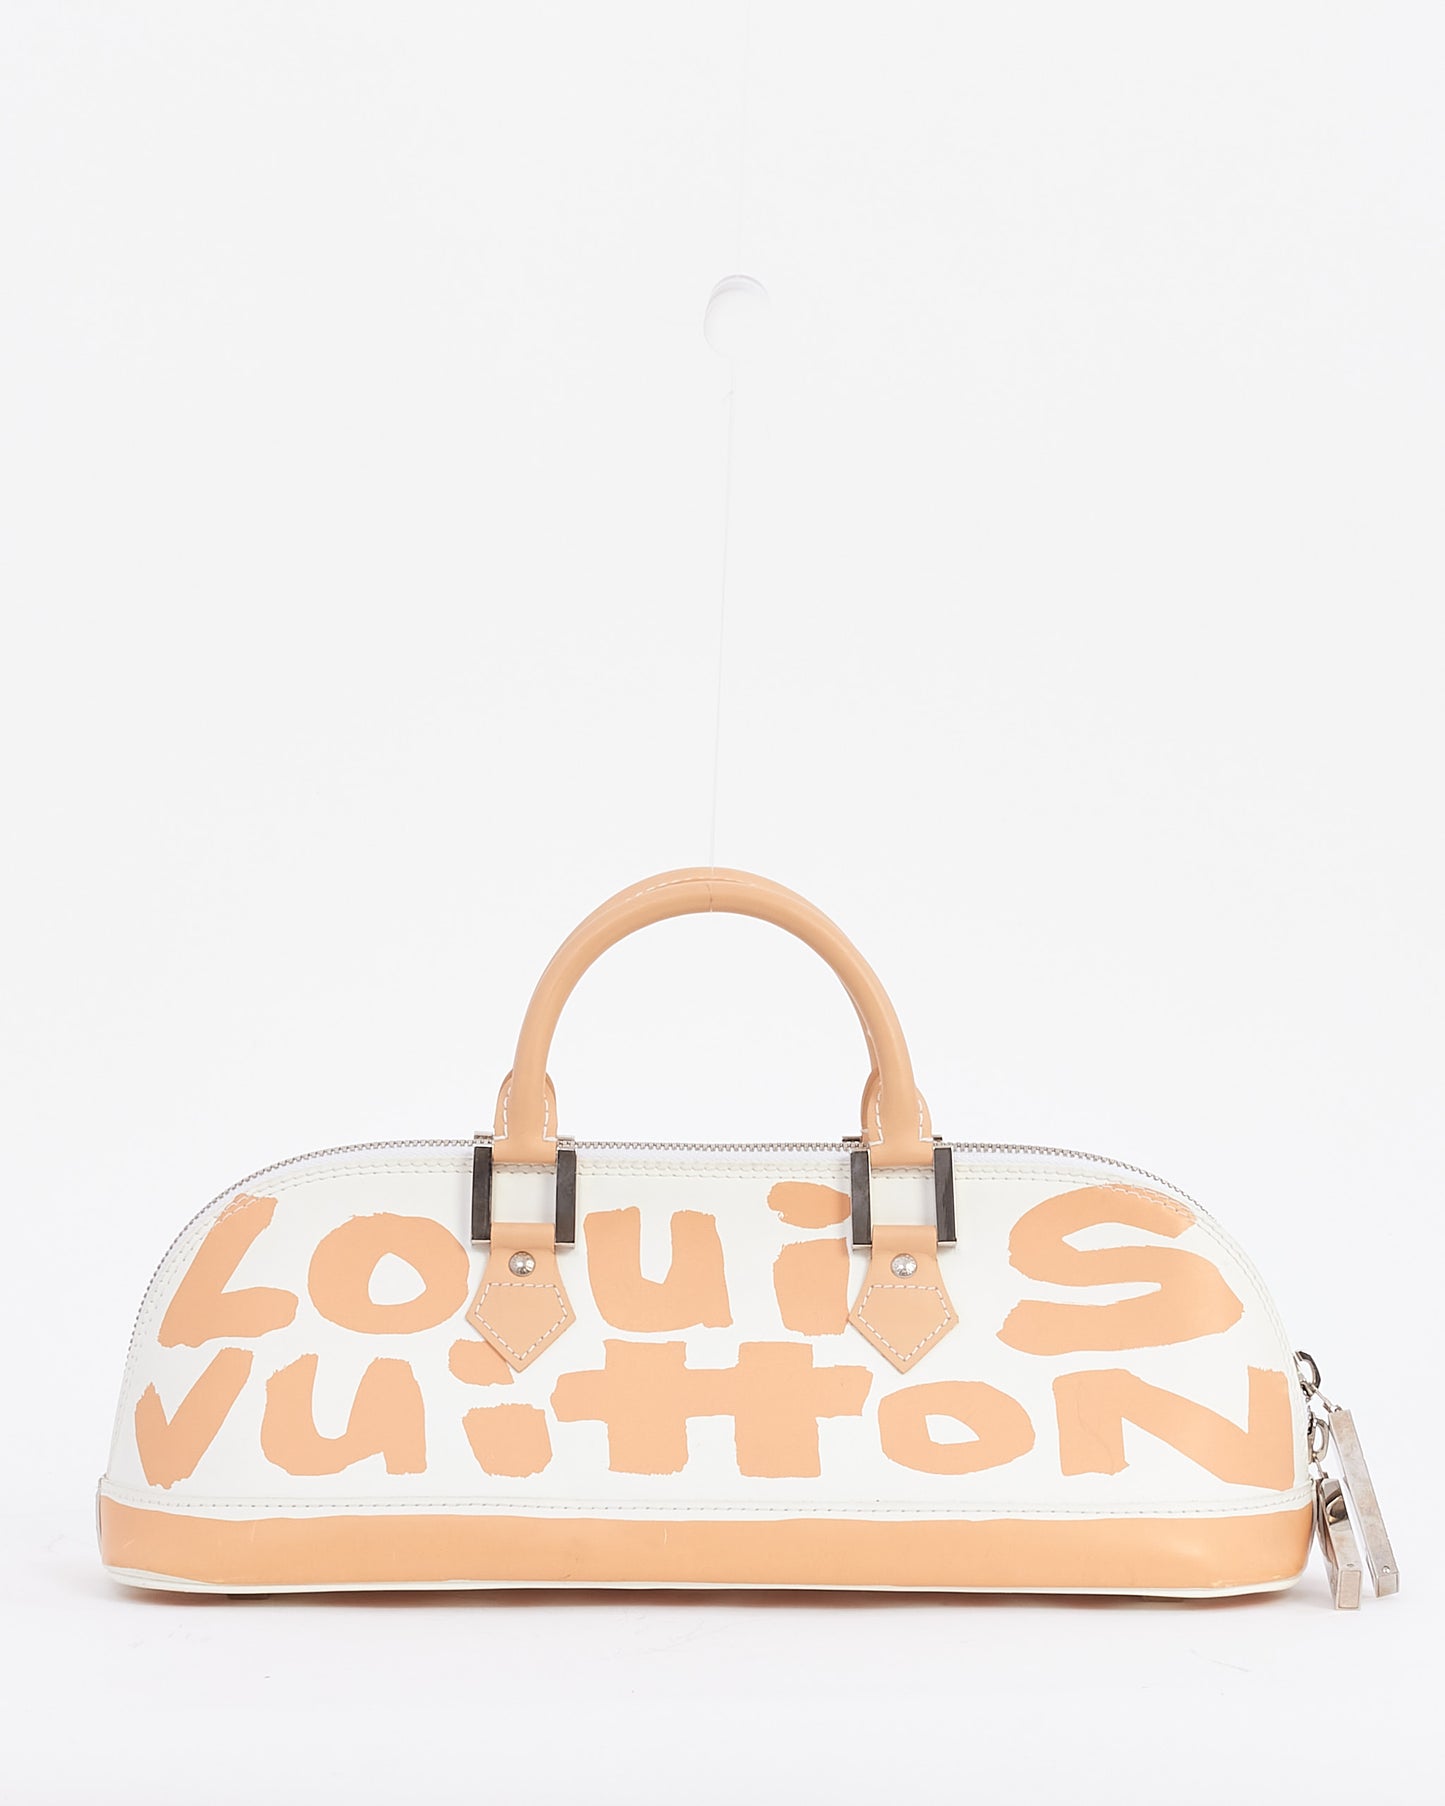 Louis Vuitton Beige/Crème Stephen Sprouse Horizontal Graffiti Alma Sac